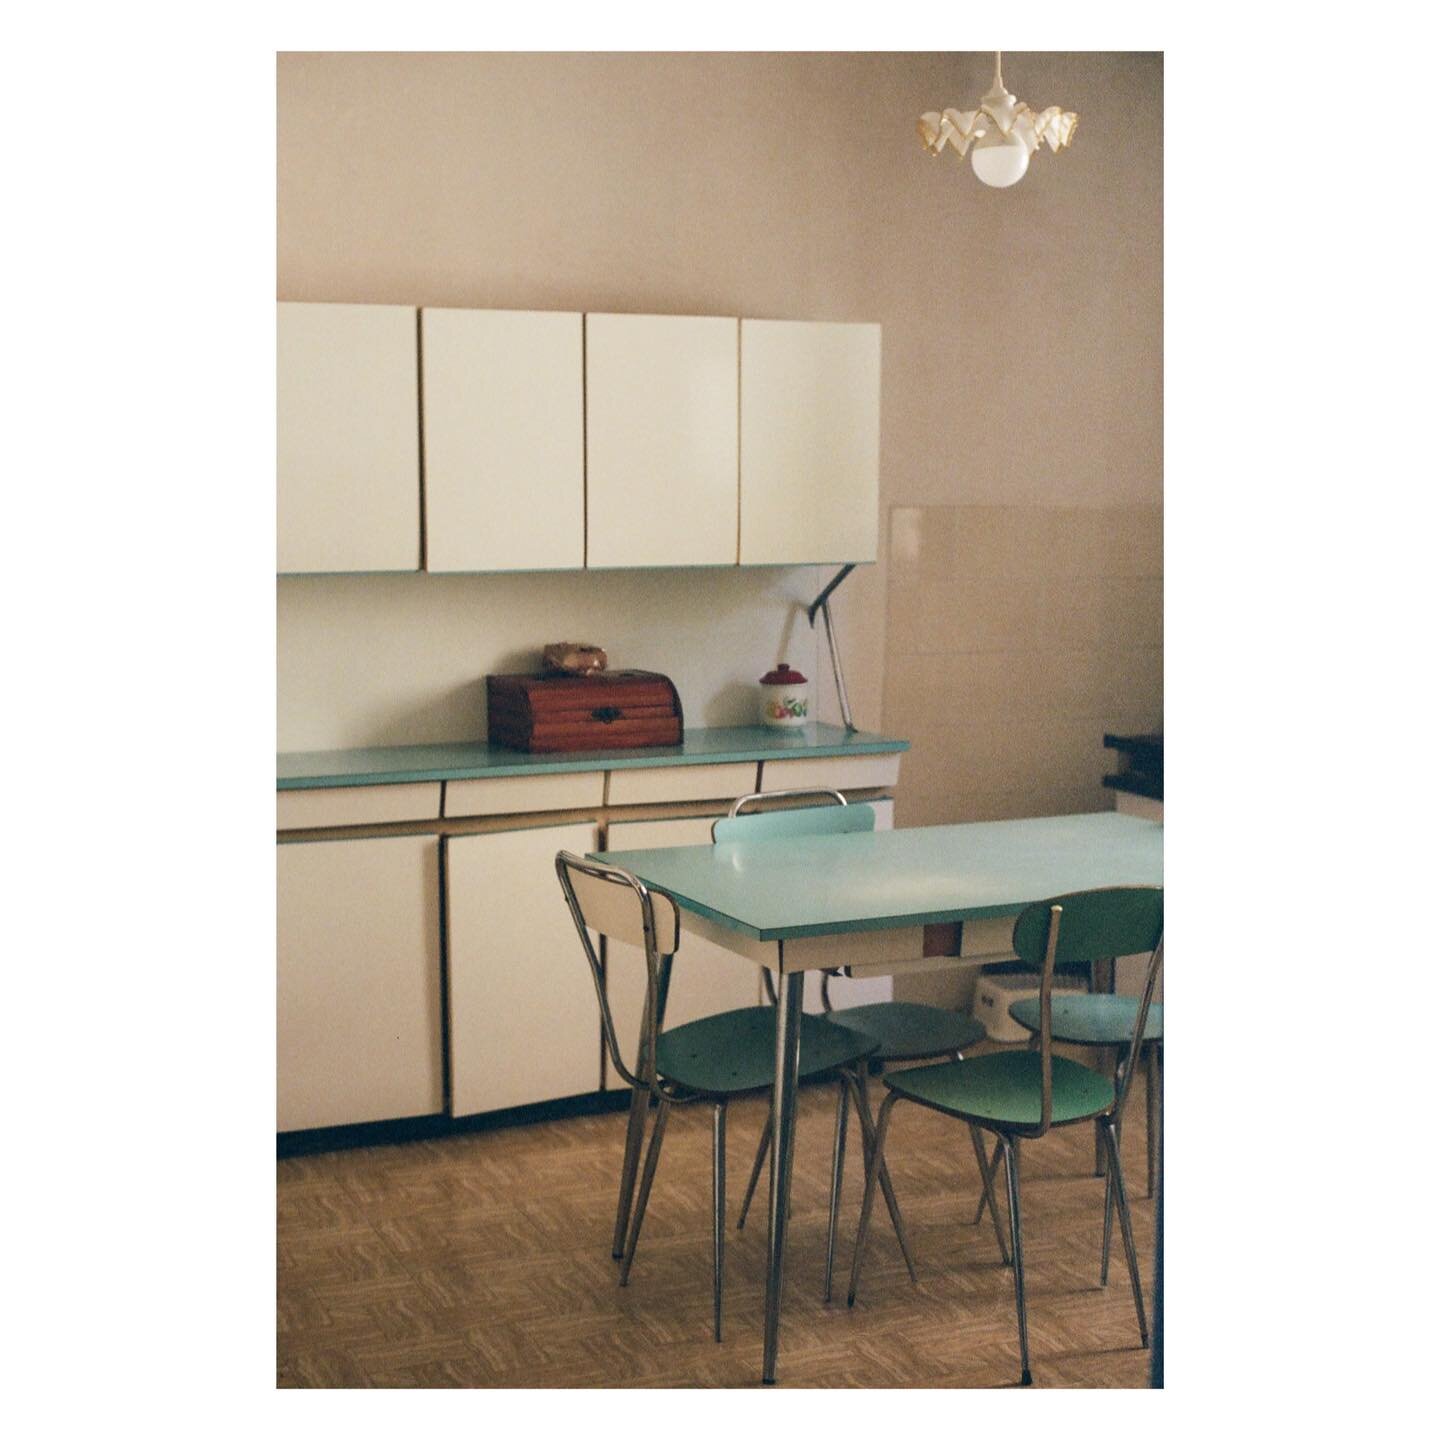 nonna&rsquo;s kitchen 
.
.
.
July 2022
Allerona, Italy
.
#italia #allerona #cucina #kodakporta400 #kodak #kodakportra #canonae1 #filmphotography #35mm